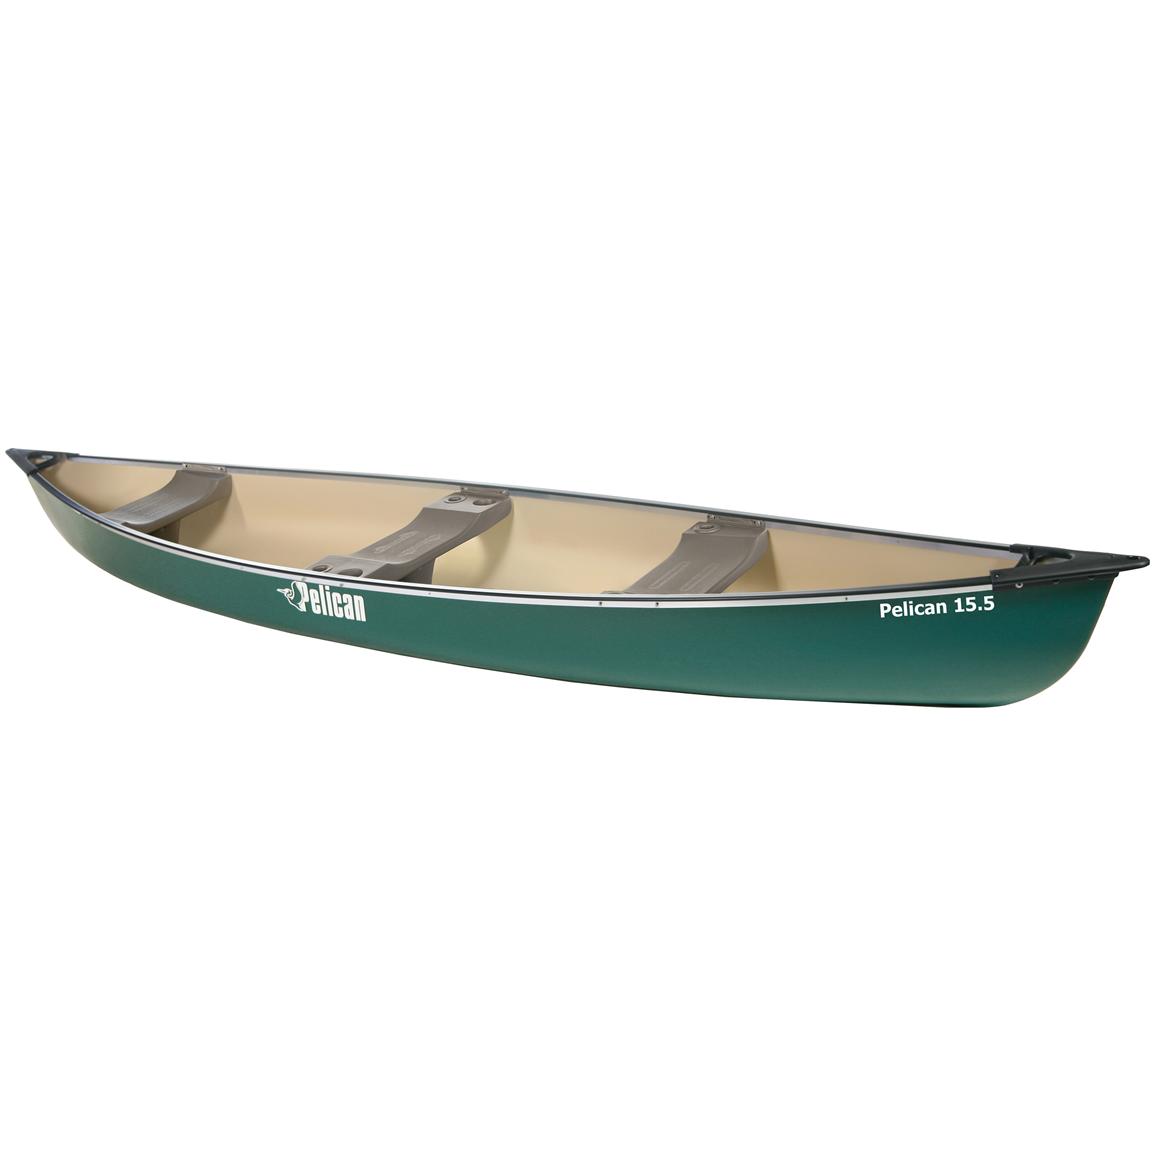 Pelican™ 15.5 Canoe - 183748, Canoes & Kayaks at Sportsman's Guide1155 x 1155